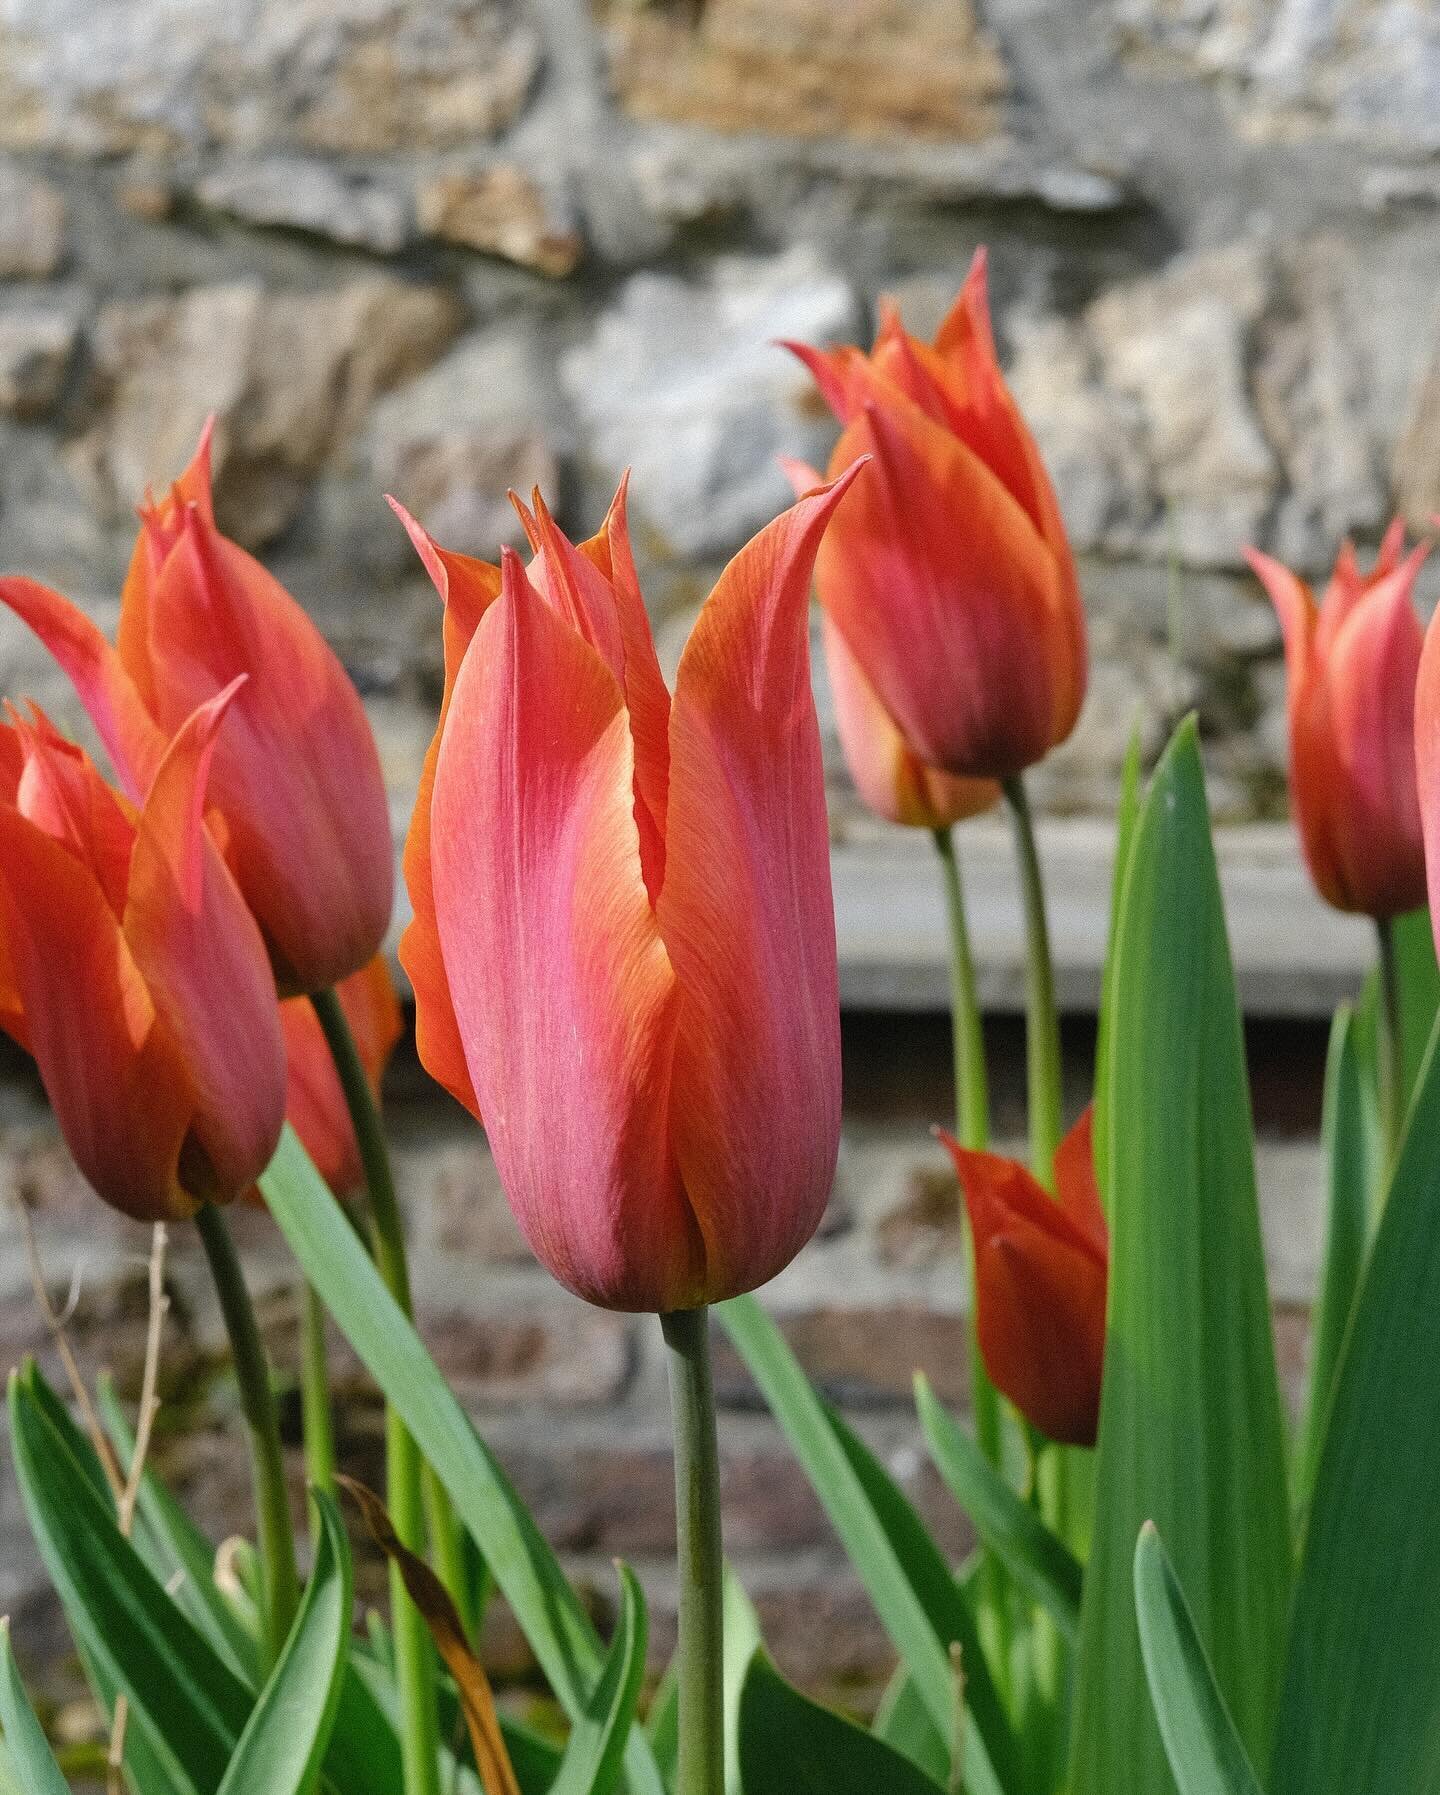 More floral beauty from Chateau Wod&egrave;mont 🌷 @fleuropean
.
#Fleuropean #Belgium #ChateauWodemont #underthefloralspell #dsfloral #travelingflorist #springflowers #springblooms